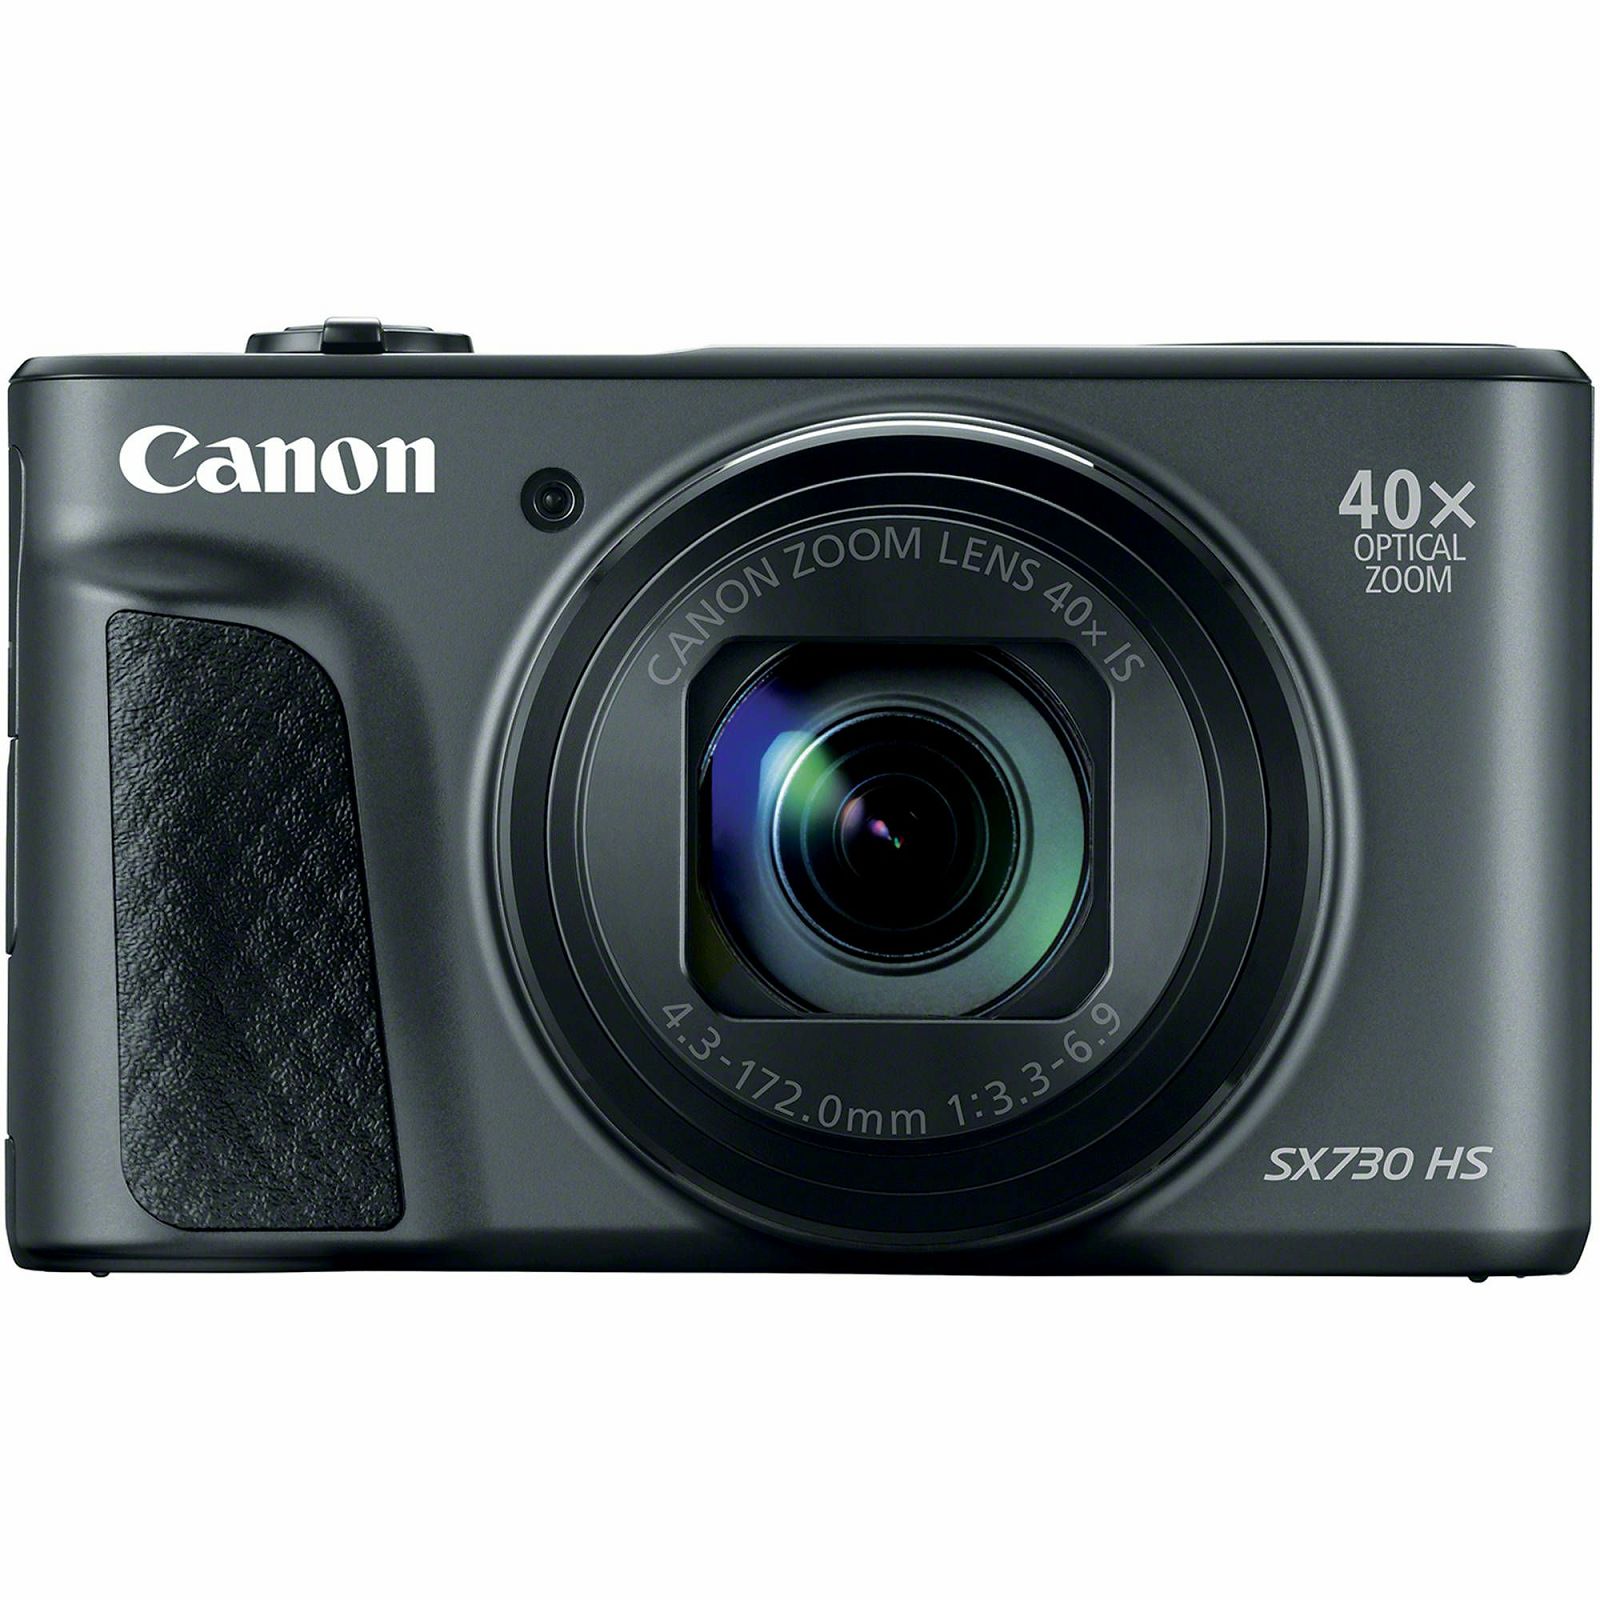 Canon Powershot SX730 HS Black crni digitalni kompaktni fotoaparat (1791C002AA)